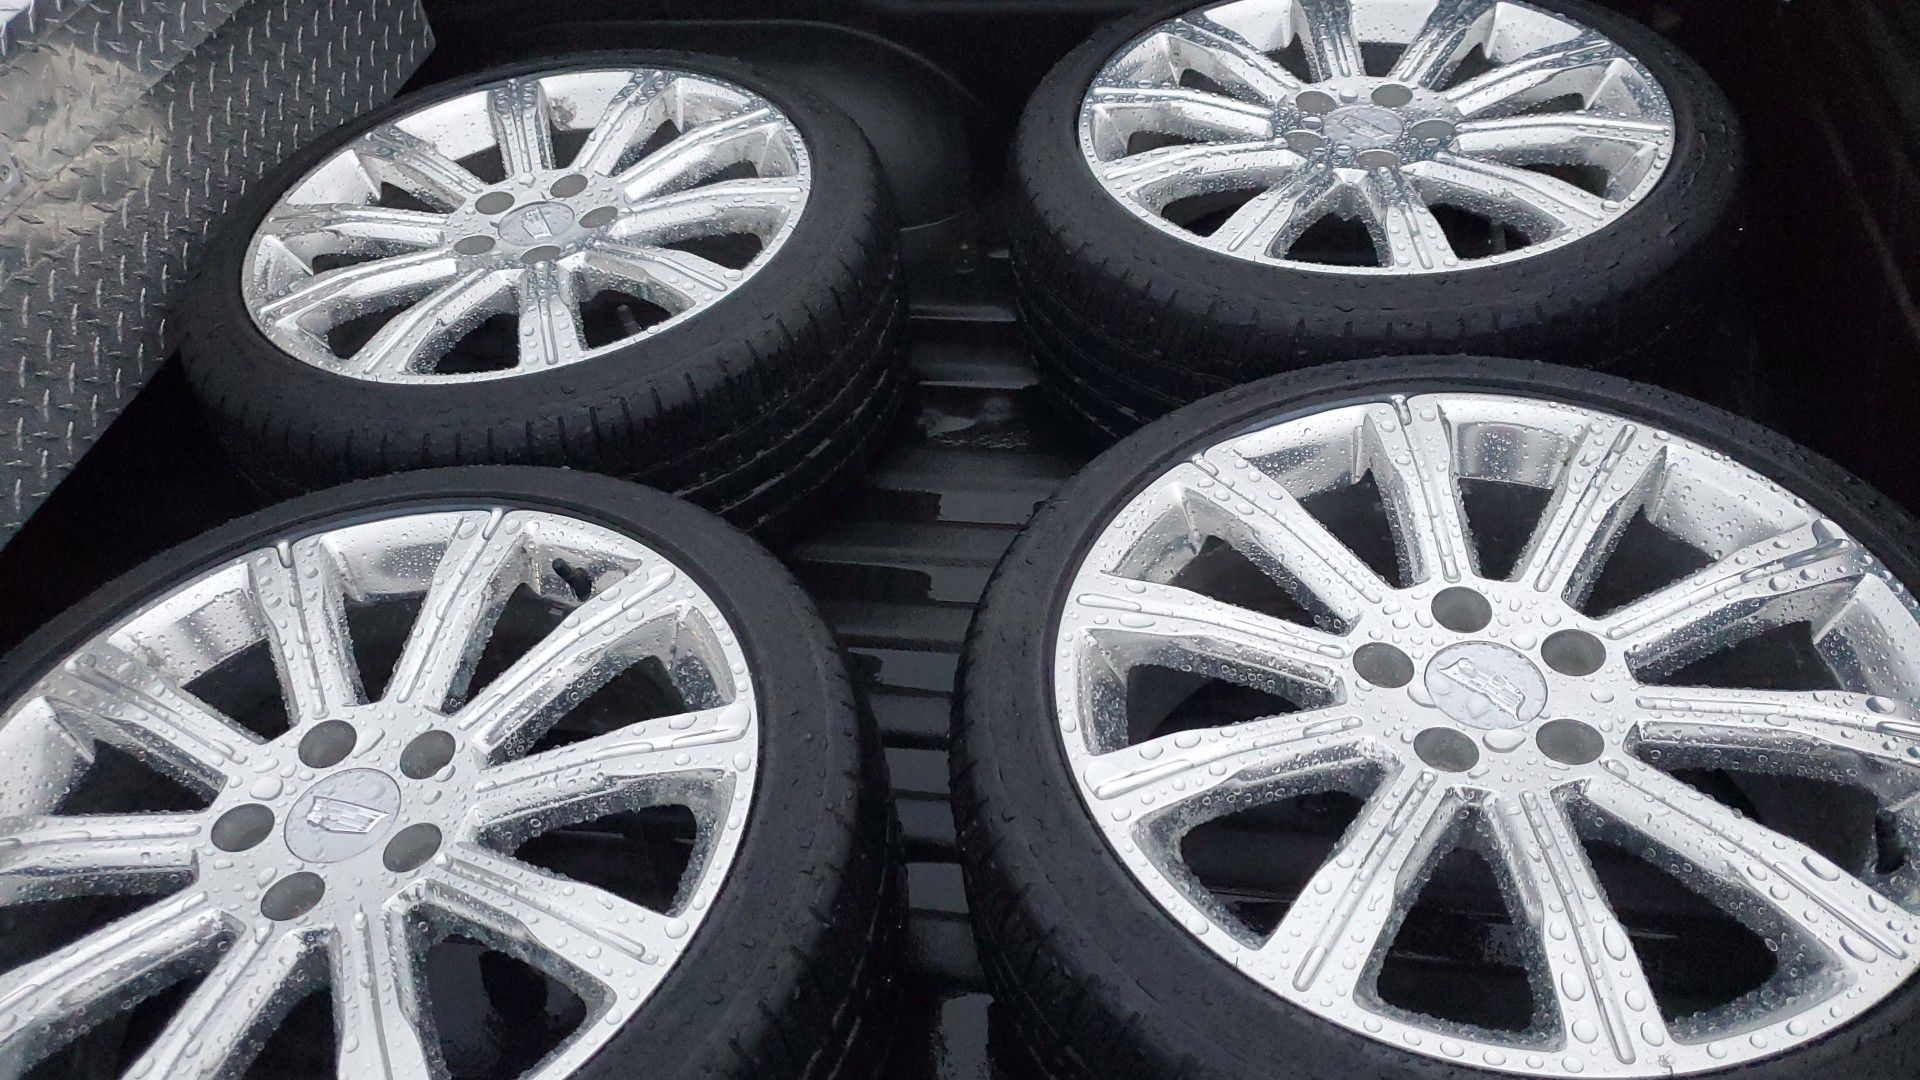 Cadillac wheels and tires